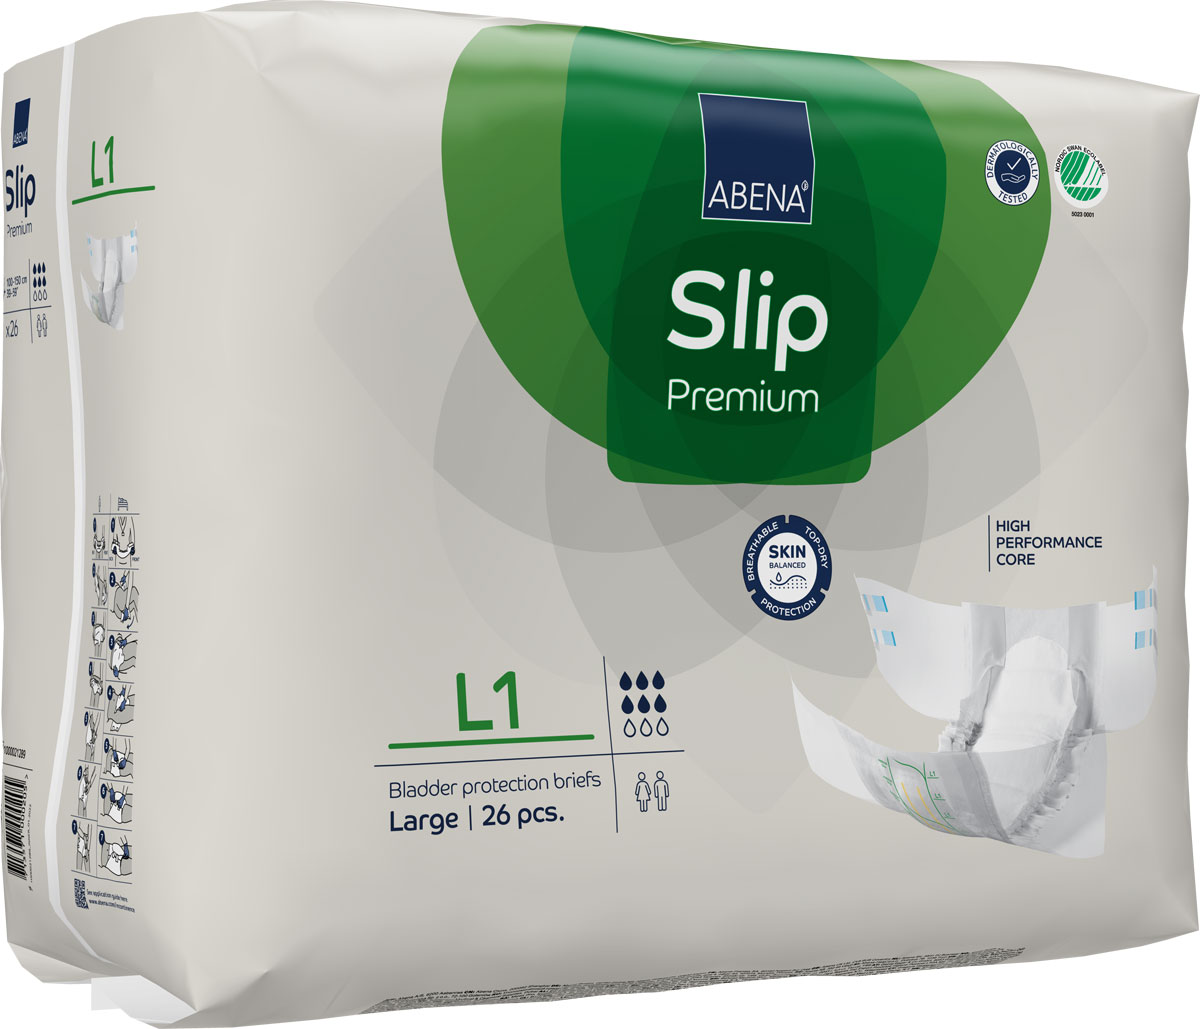 ABENA Slip Premium Gr. L1 - Inkontinenzwindeln  (4x26 Stück)